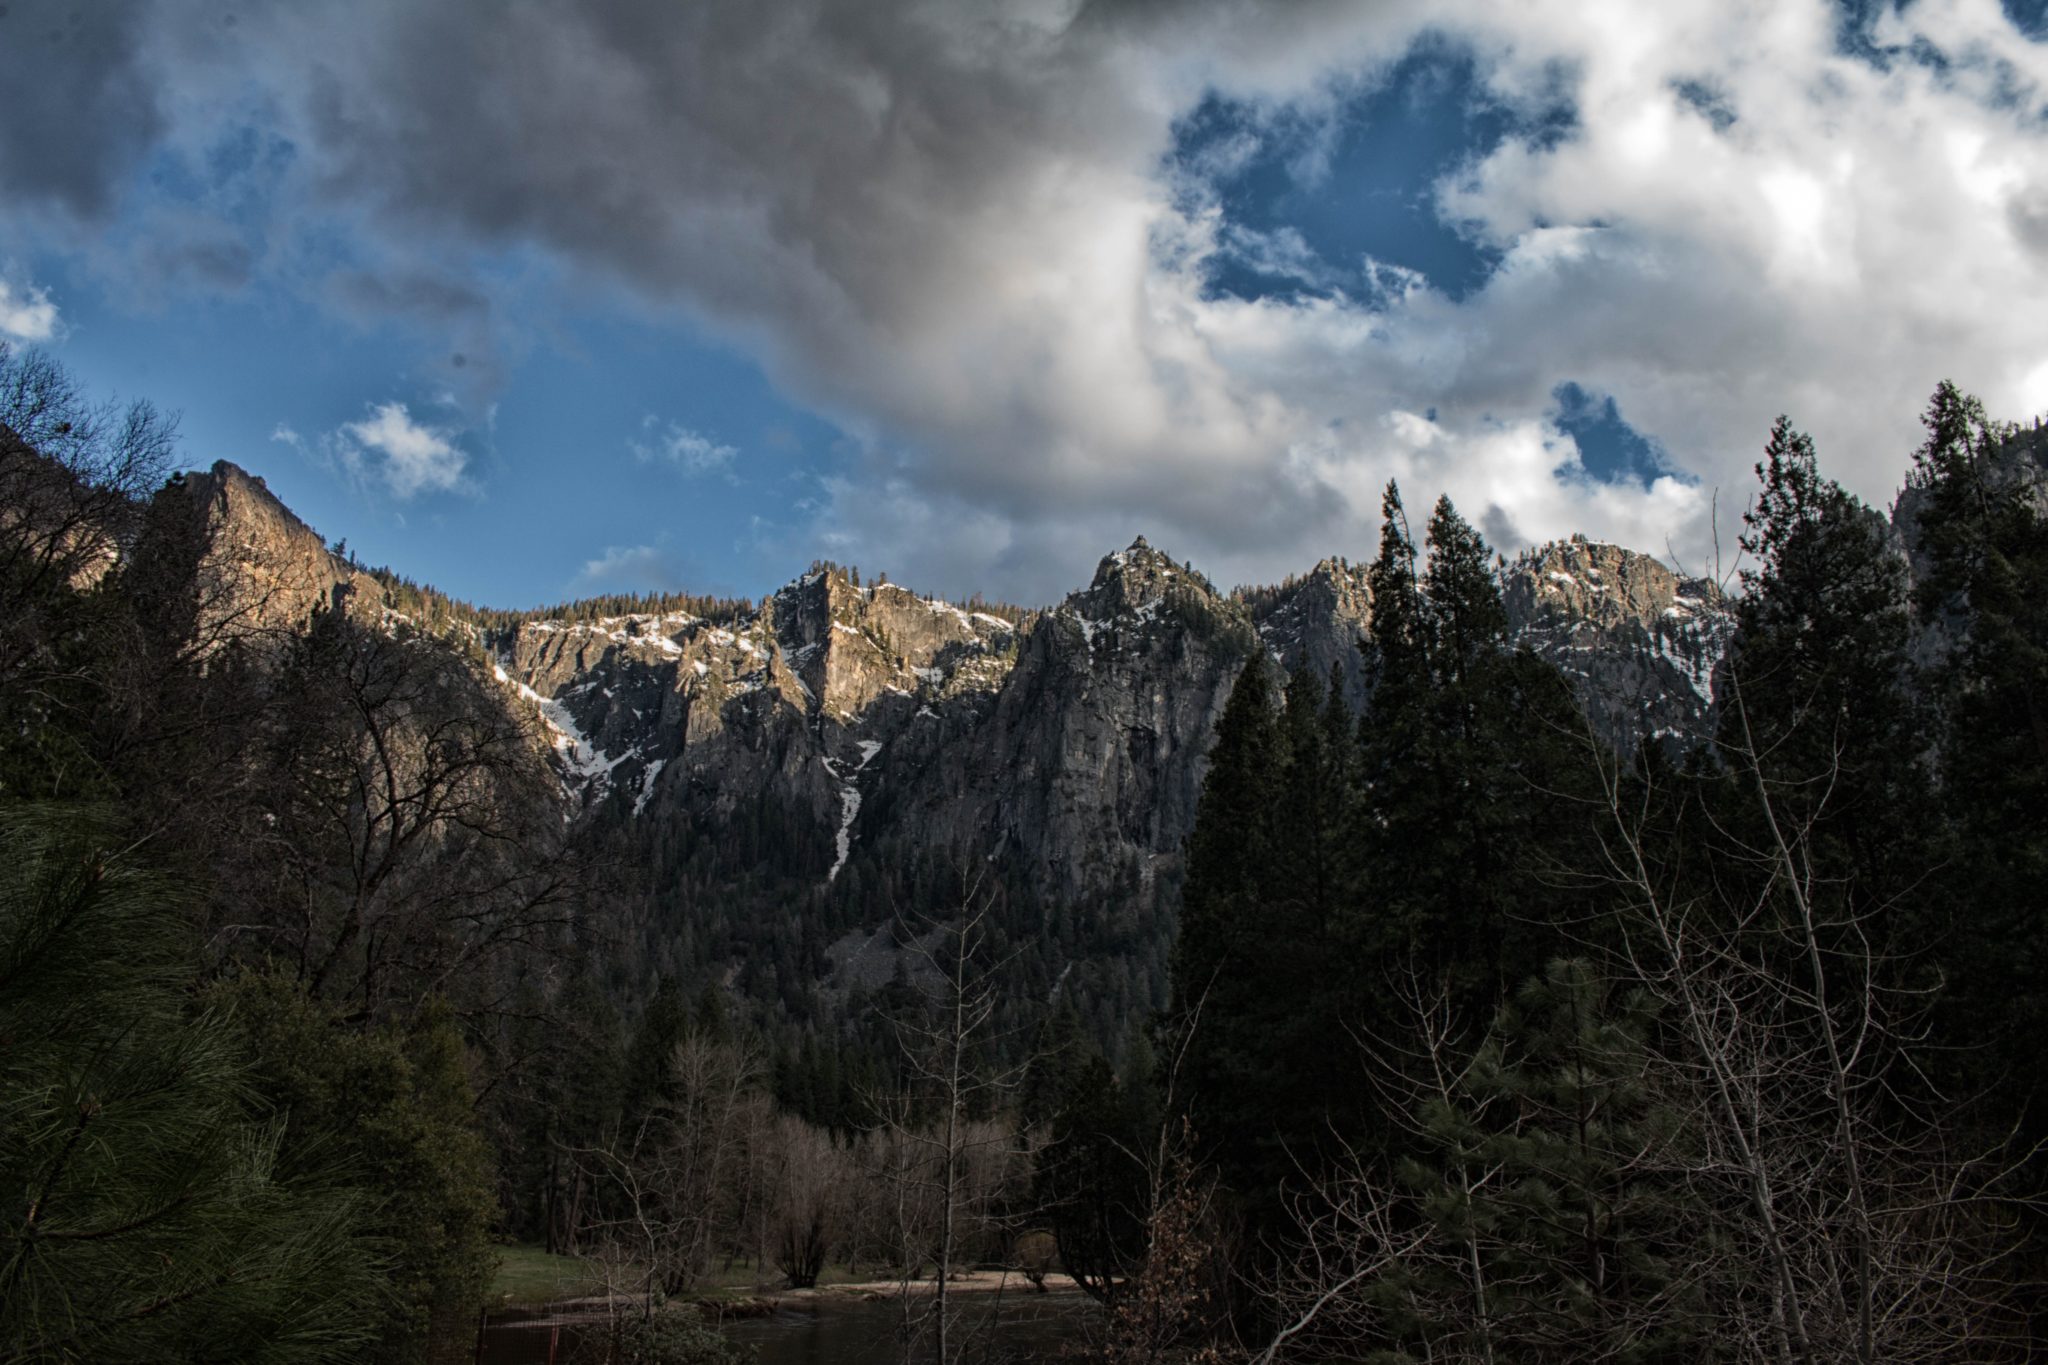 Yosemite national park